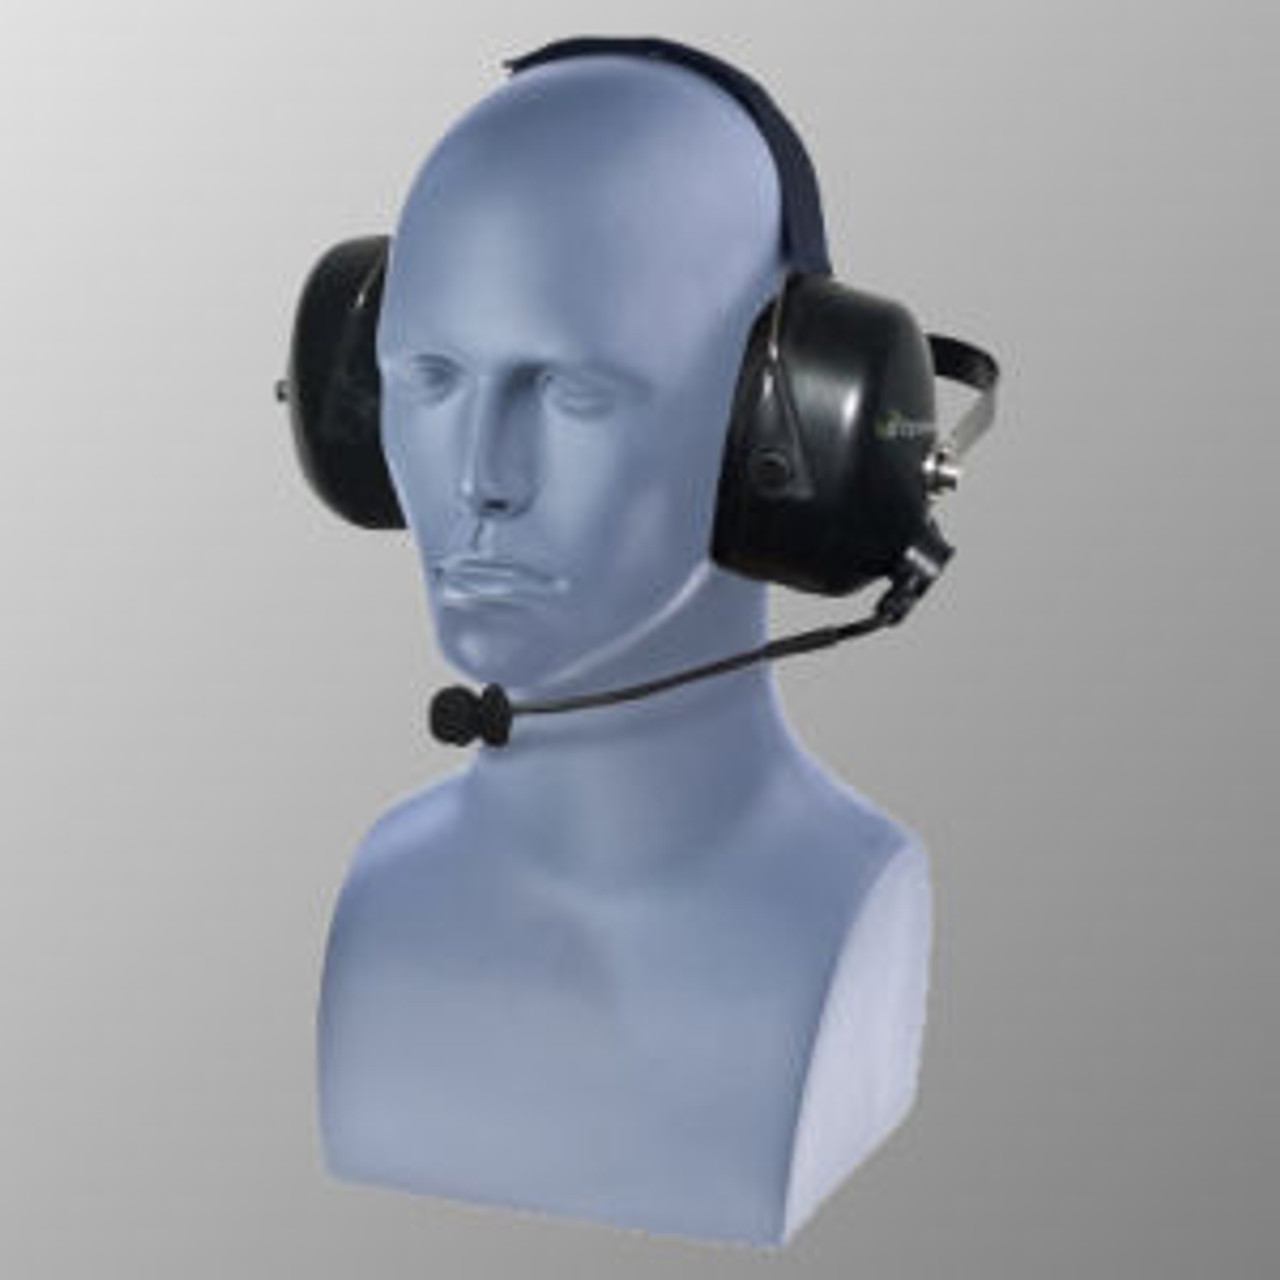 Vertex Standard VX-350 Noise Canceling Double Muff Behind The Head Headset